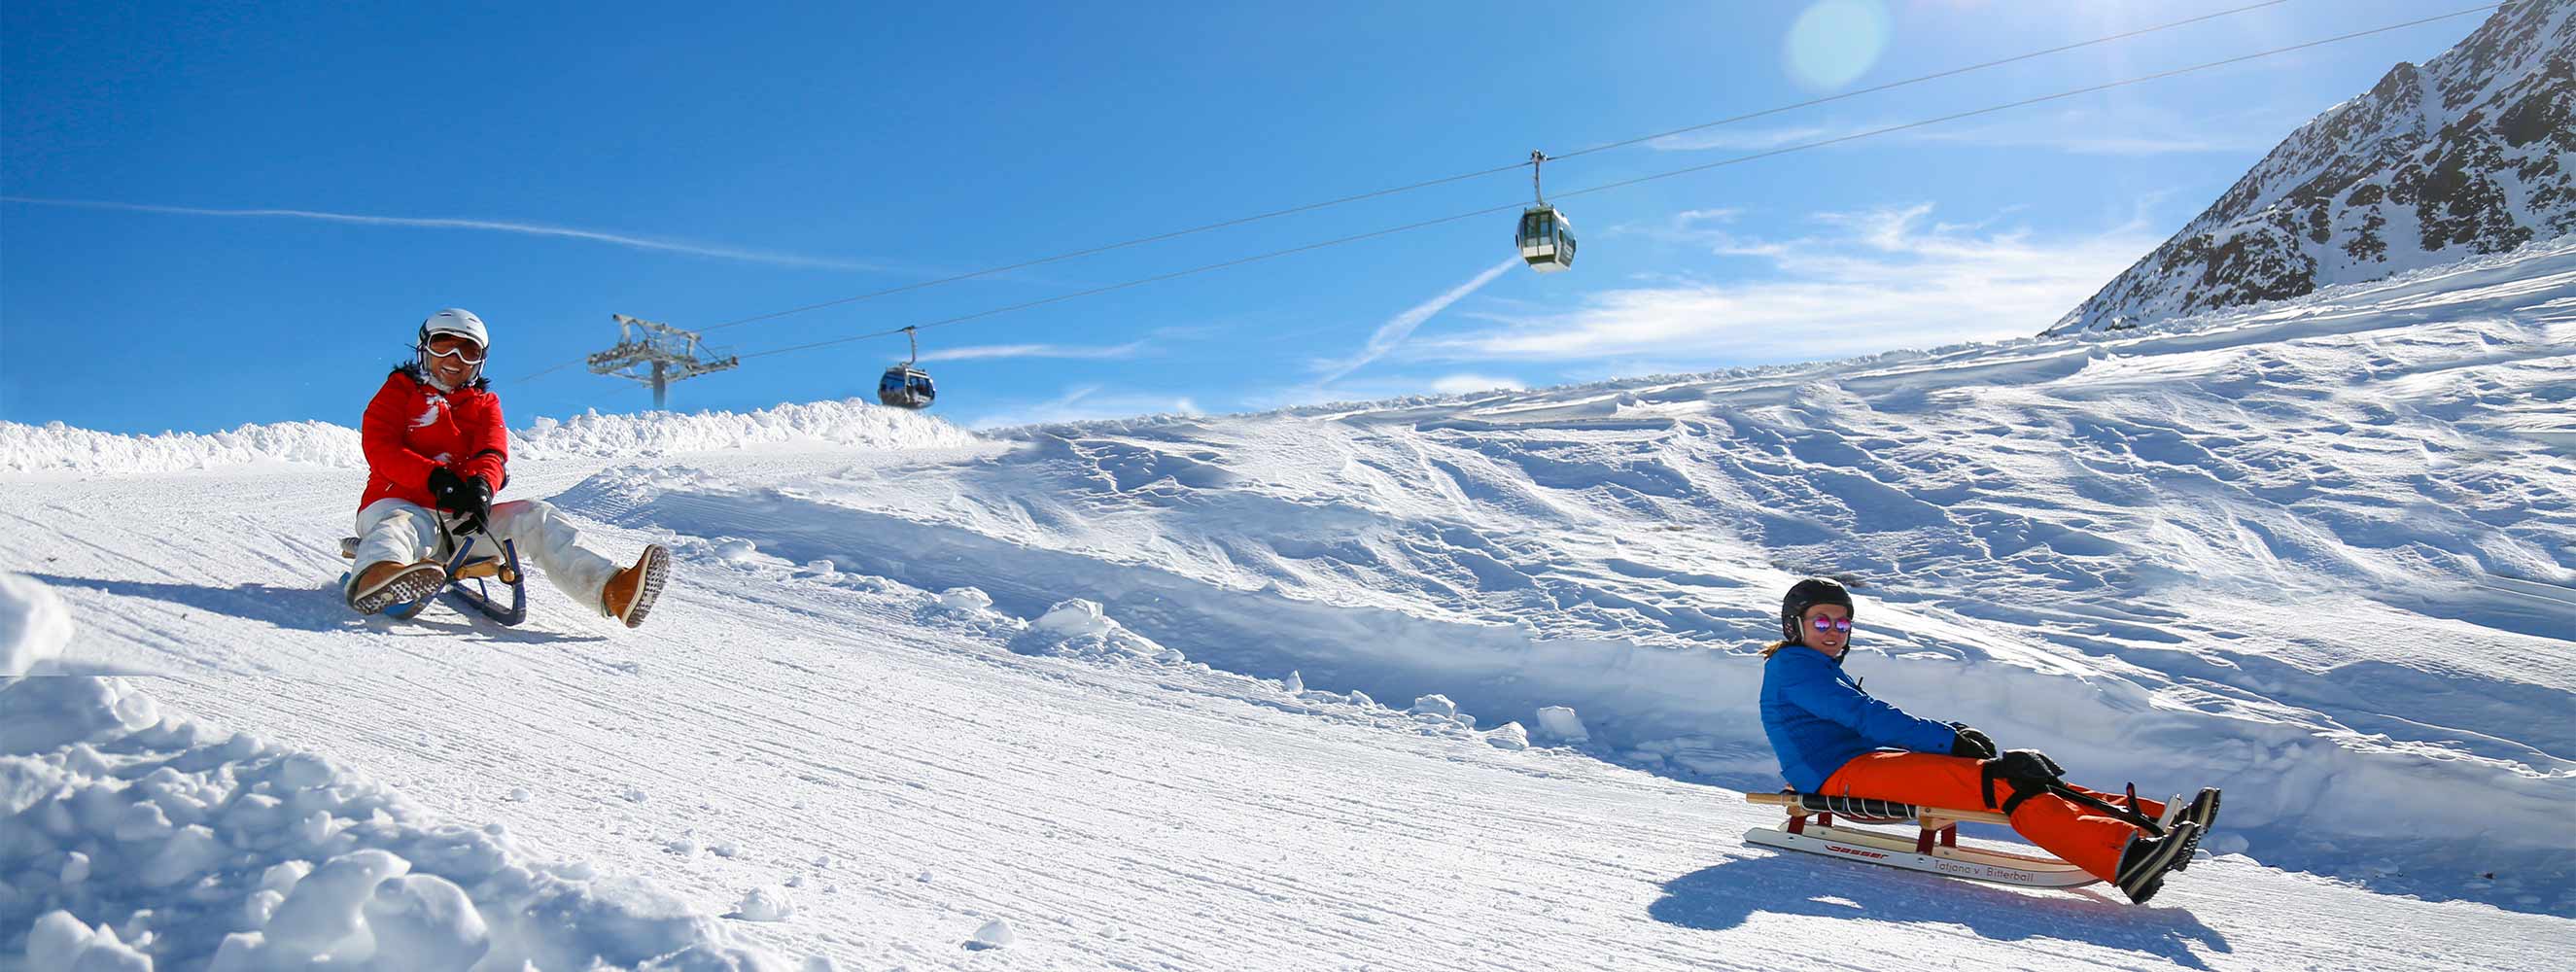 Vacanze invernali in Val Senales in Alto Adige